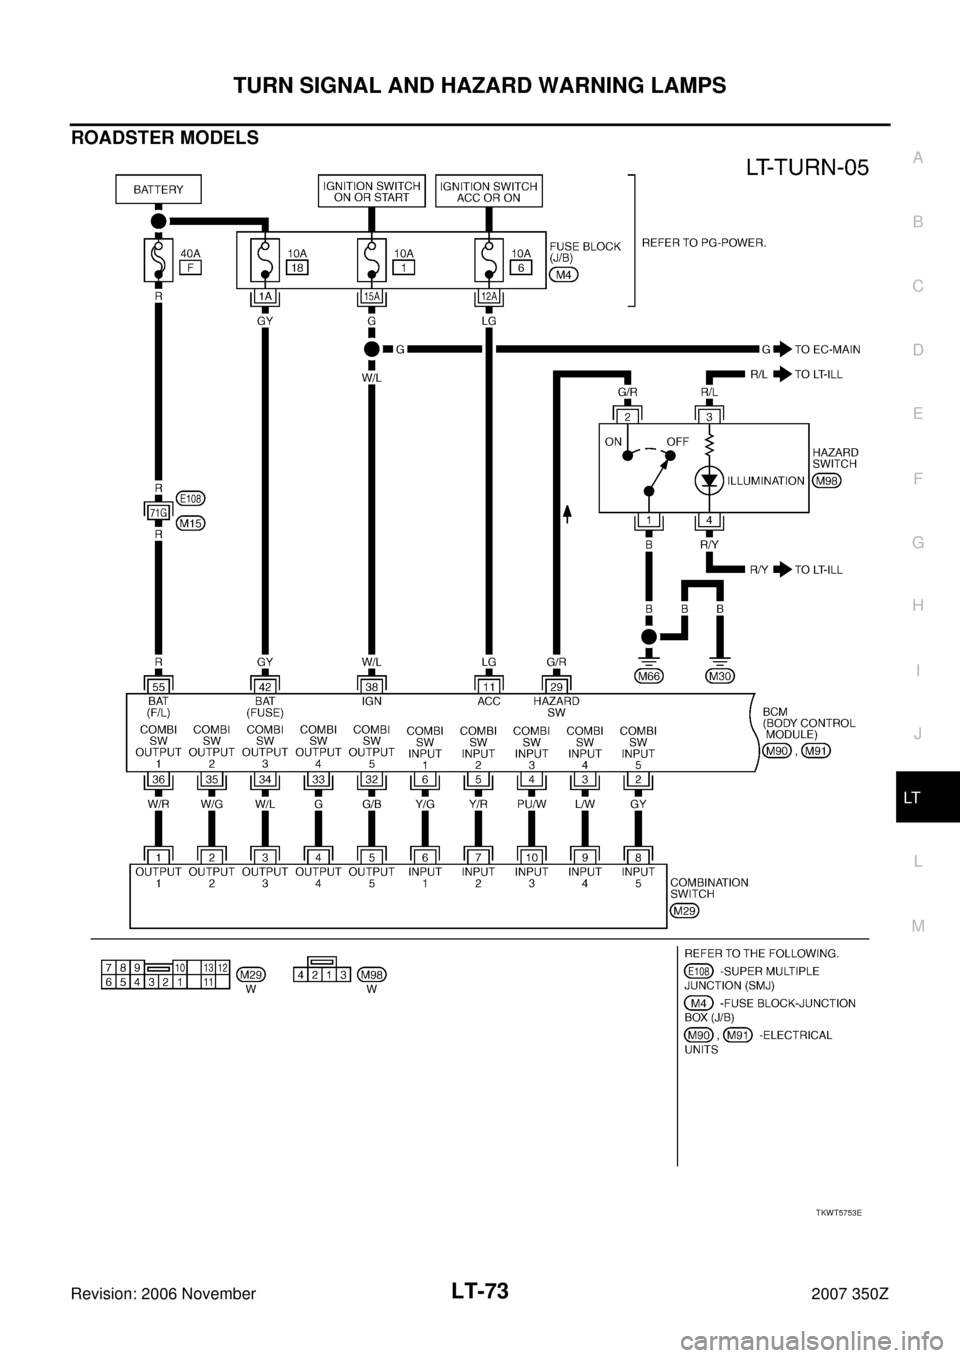 NISSAN 350Z 2007 Z33 Lighting System Manual PDF TURN SIGNAL AND HAZARD WARNING LAMPS
LT-73
C
D
E
F
G
H
I
J
L
MA
B
LT
Revision: 2006 November2007 350Z
ROADSTER MODELS
TKWT5753E 